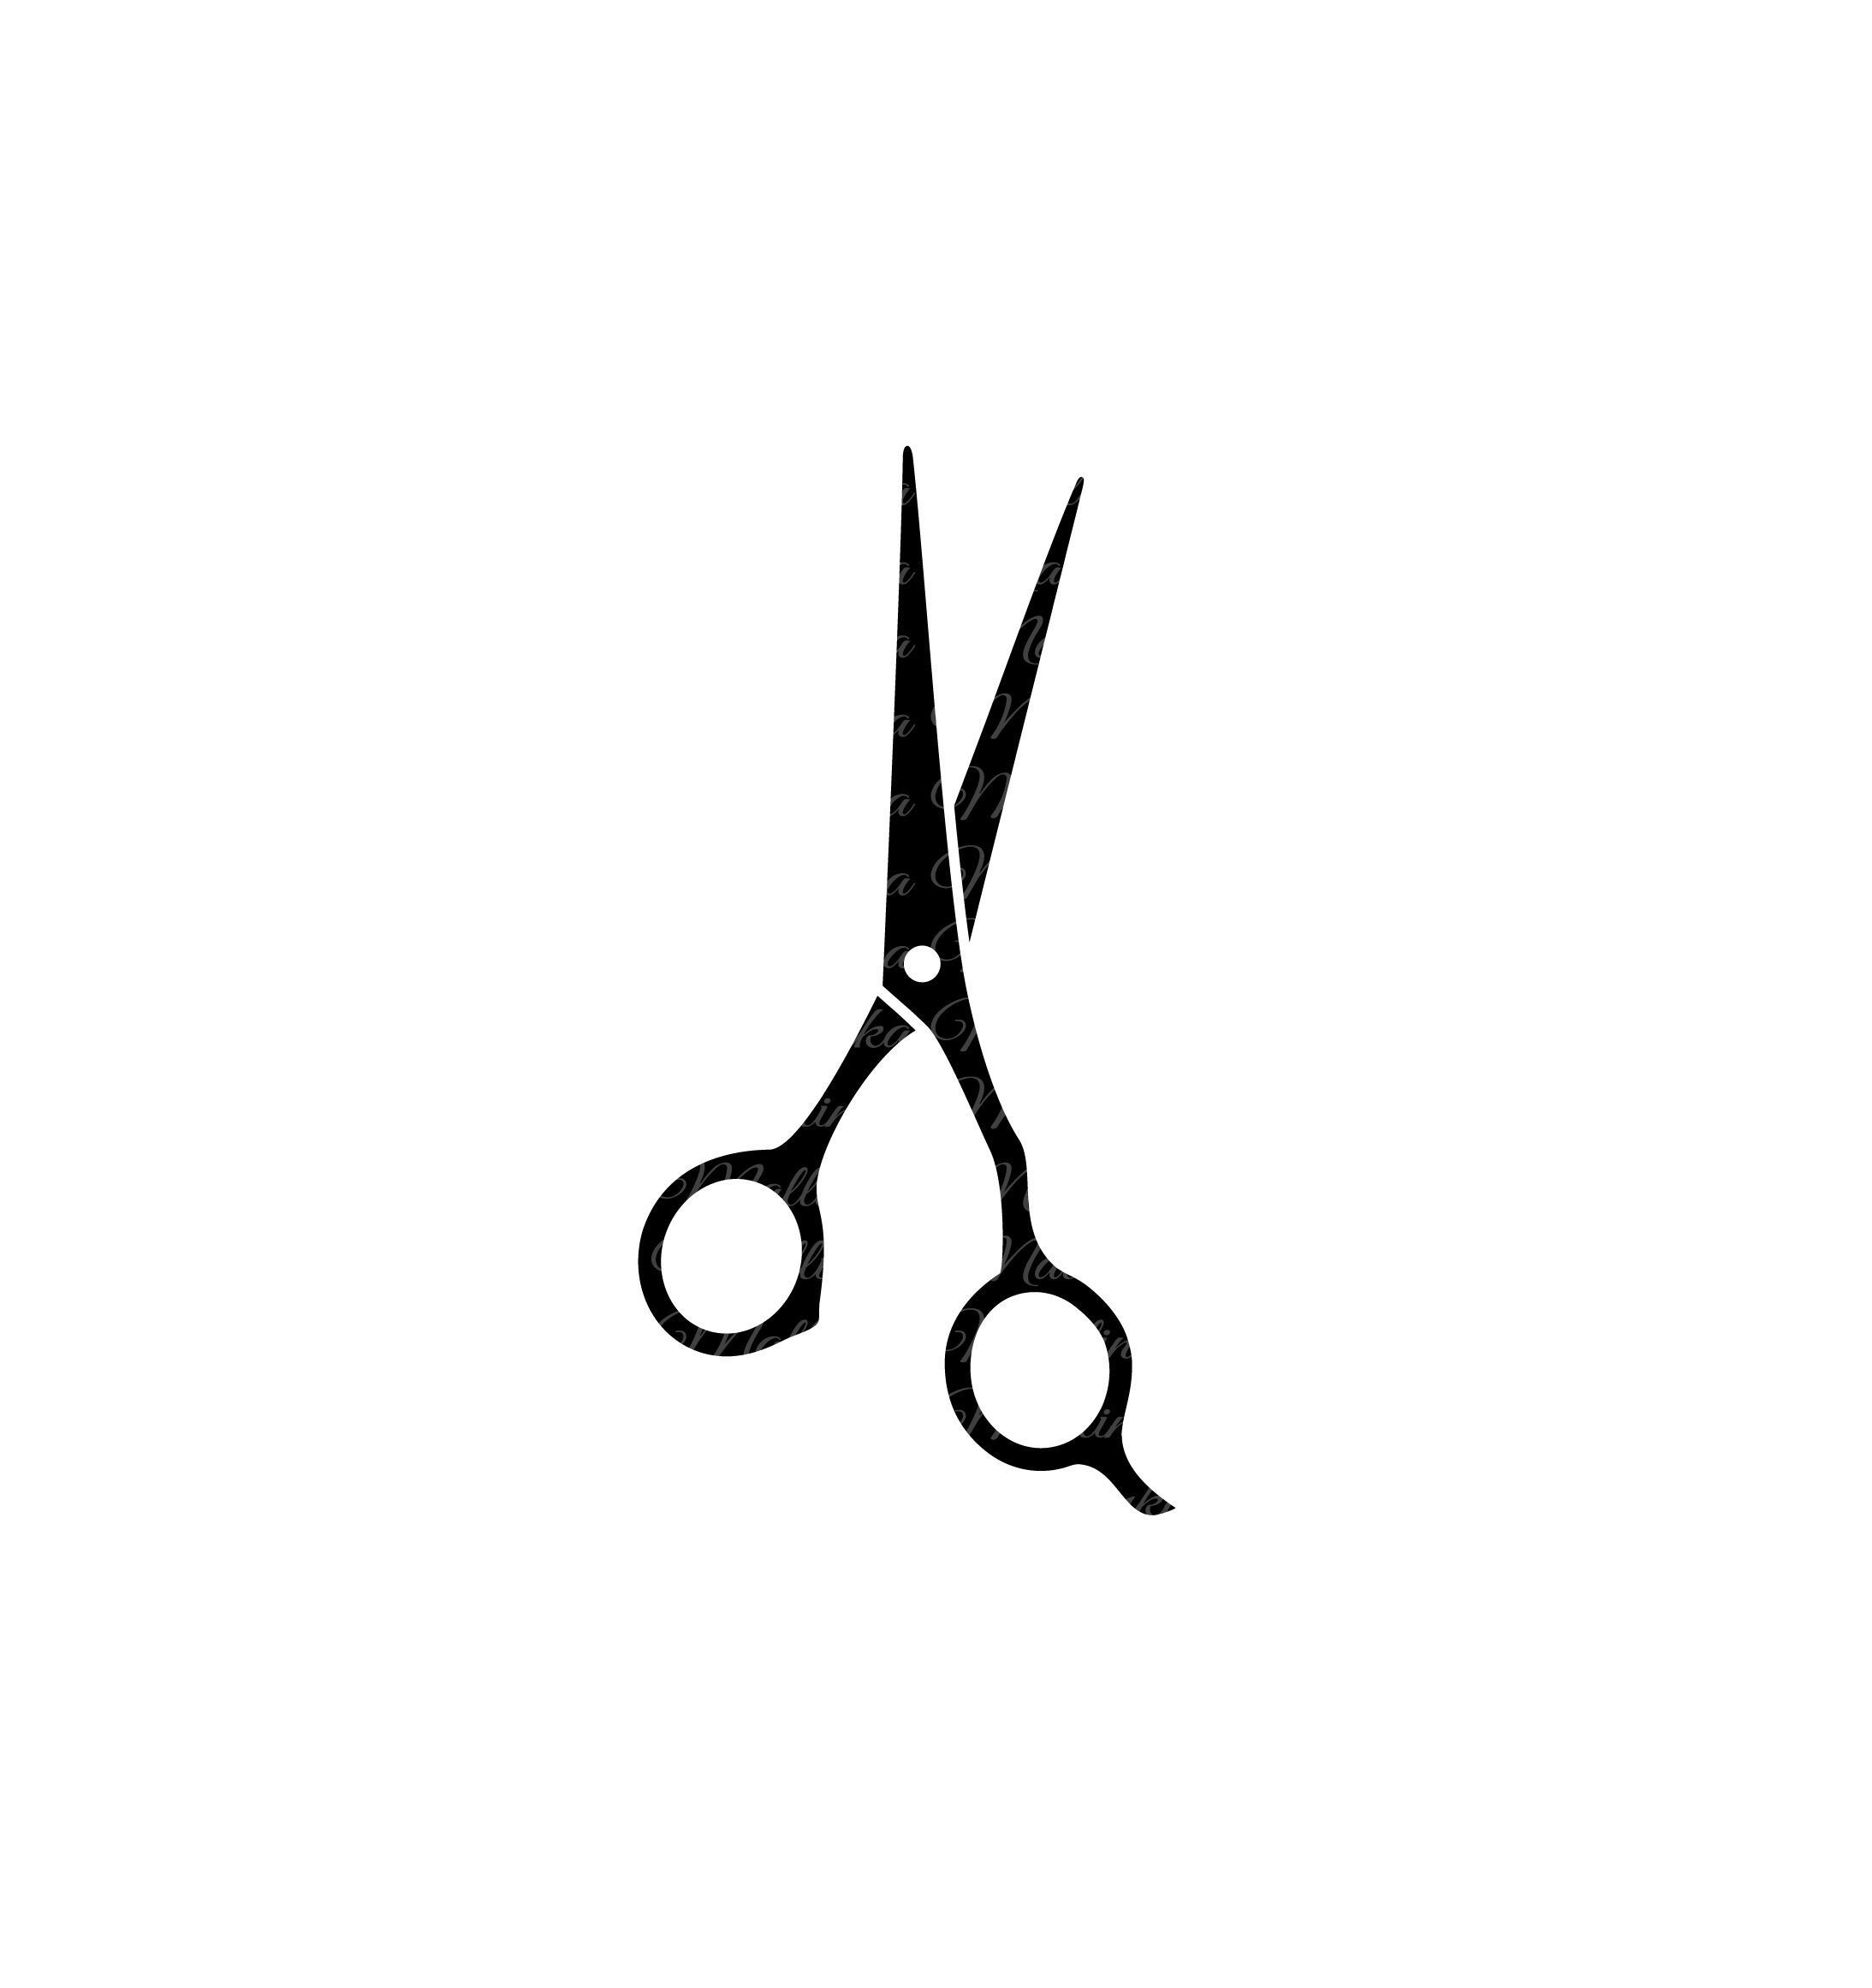 scissors png